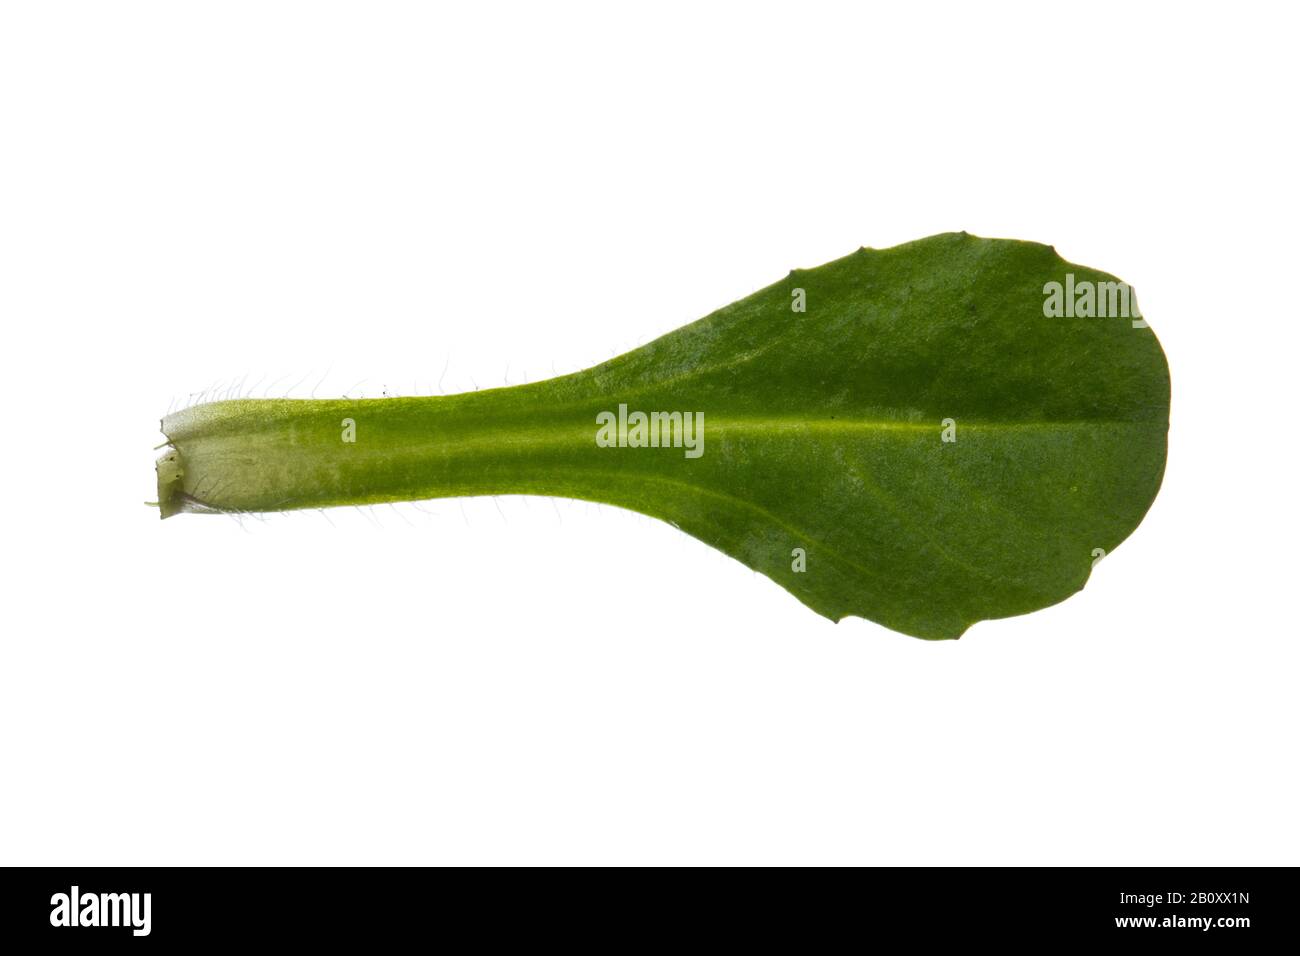 common daisy, lawn daisy, English daisy (Bellis perennis), leaf, cutout, Germany Stock Photo